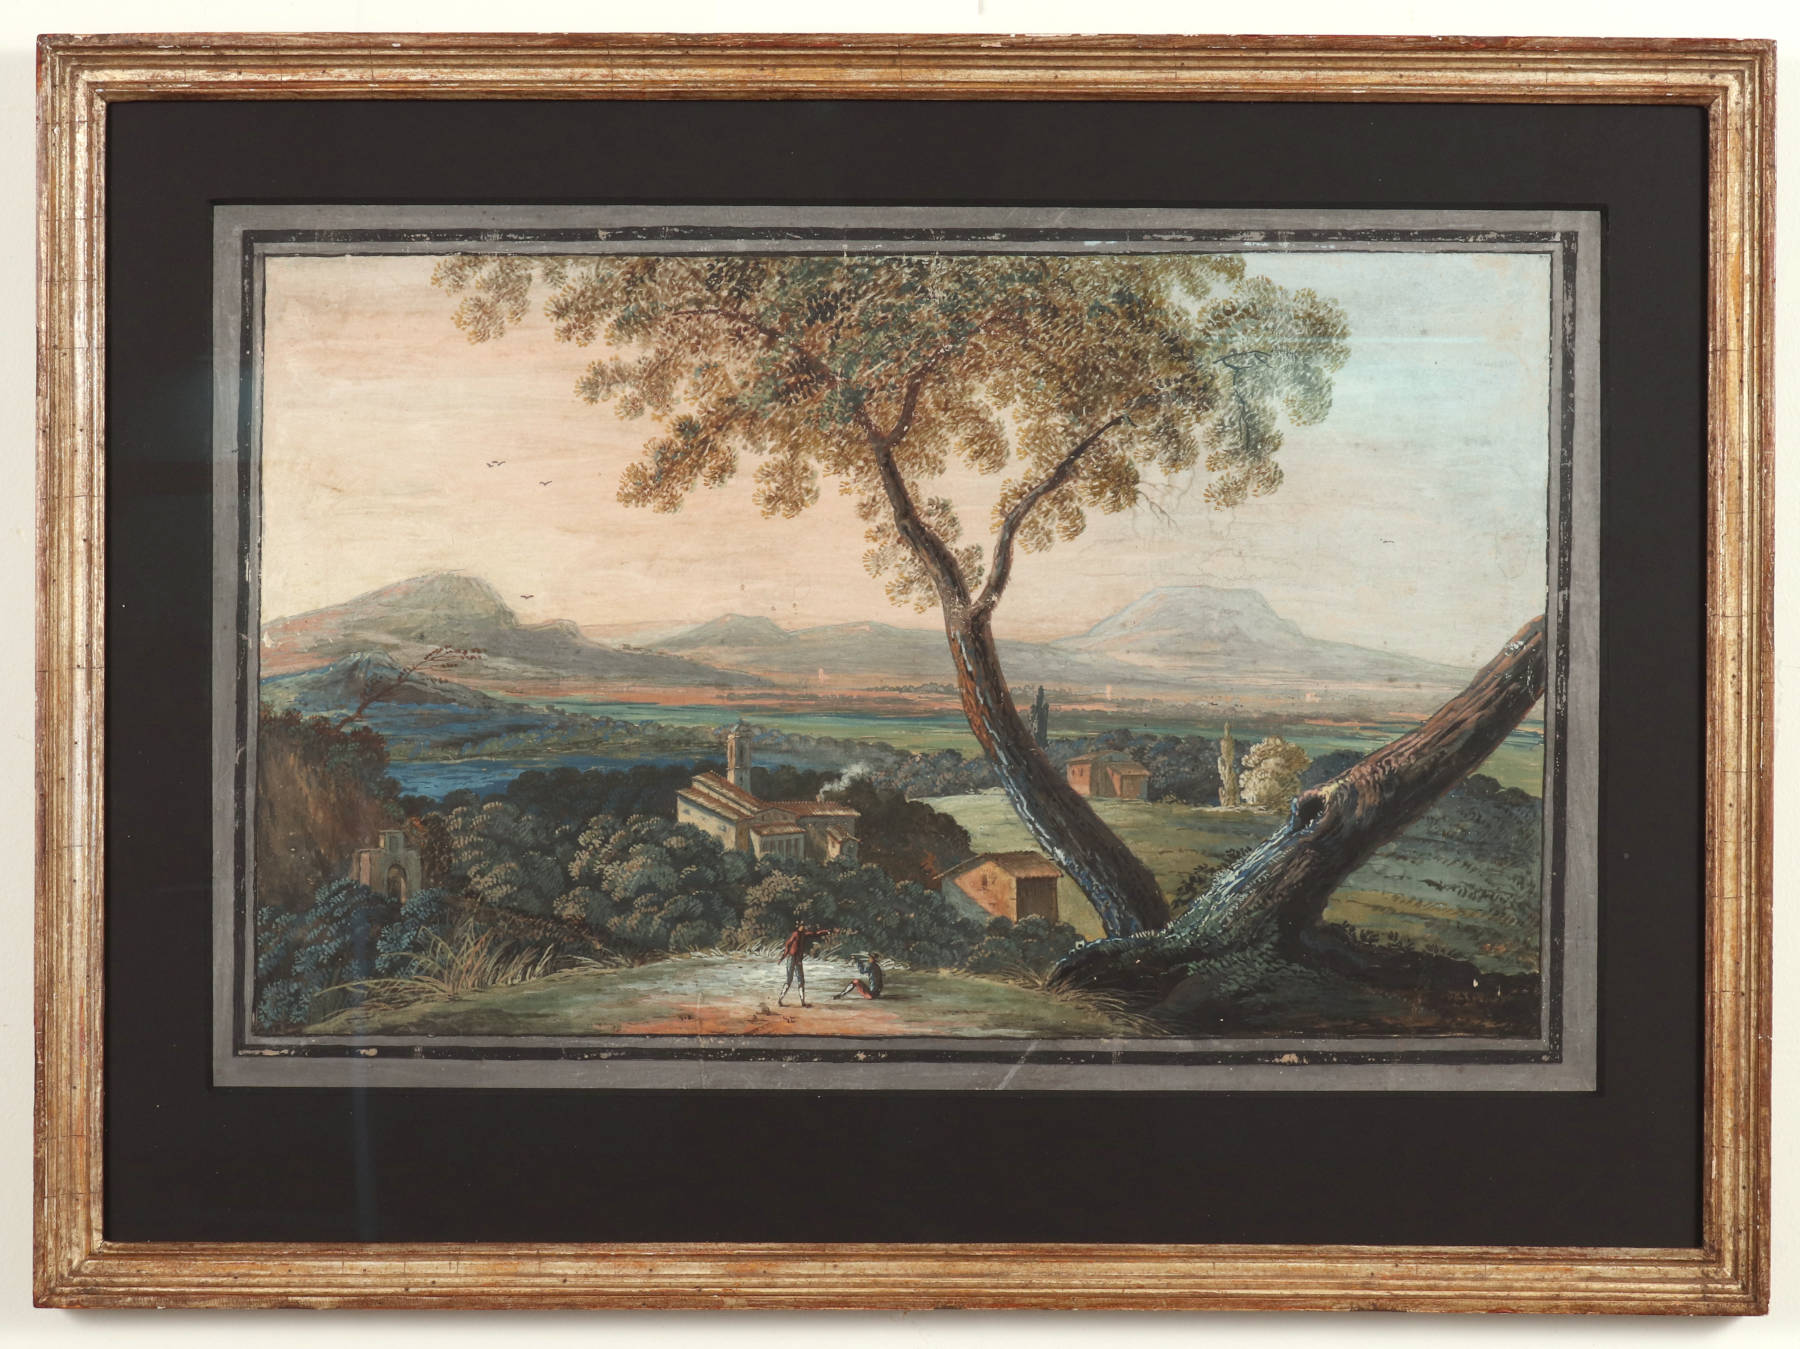 Pair of Pastoral Landscapes, 18th c.